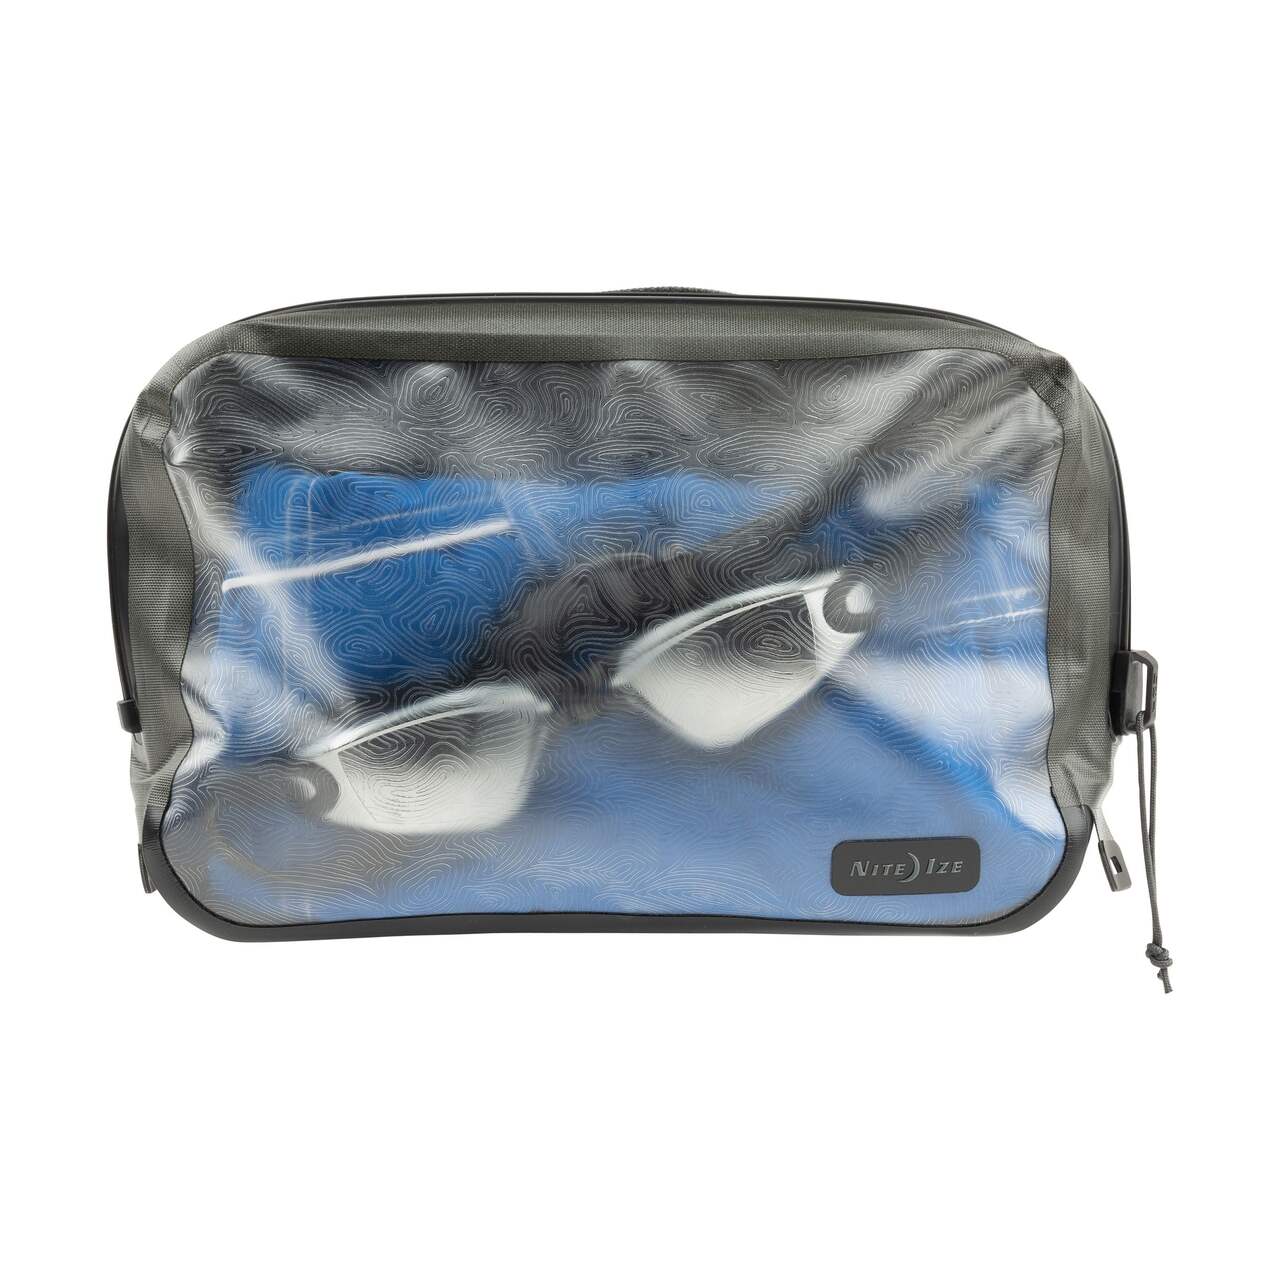 Nite Ize RunOff Waterproof Packing Cube Dry Bag For Travel